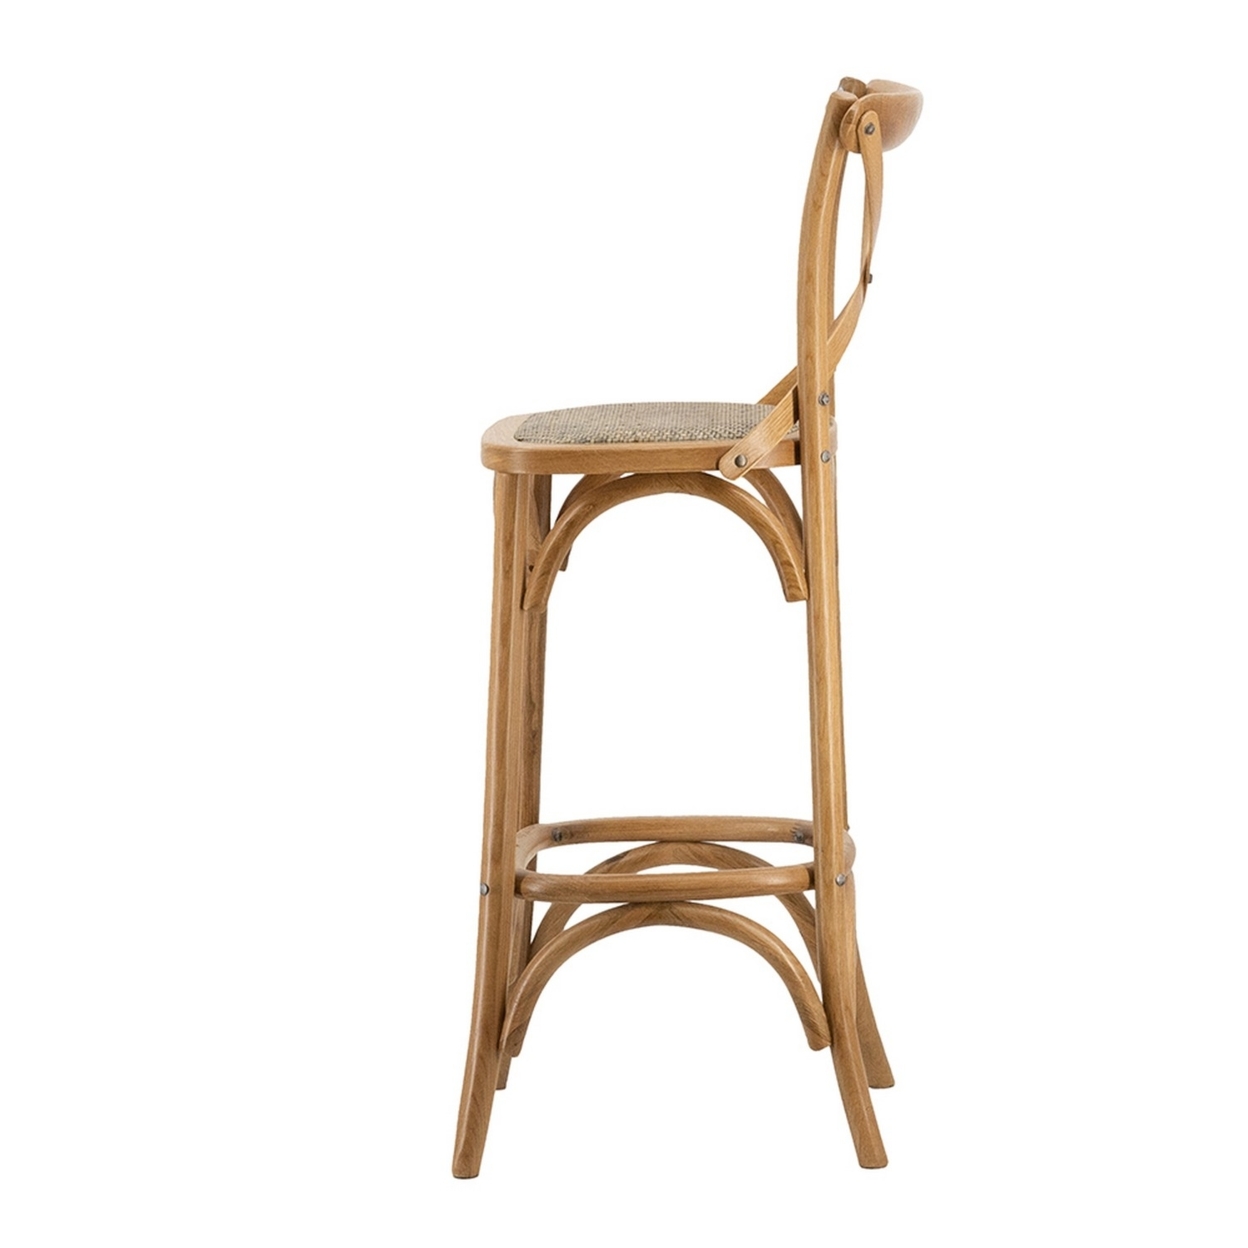 21 Inch Oak Wood Bar Chair, Square Backrest And Foam Seat, Beige, Brown- Saltoro Sherpi